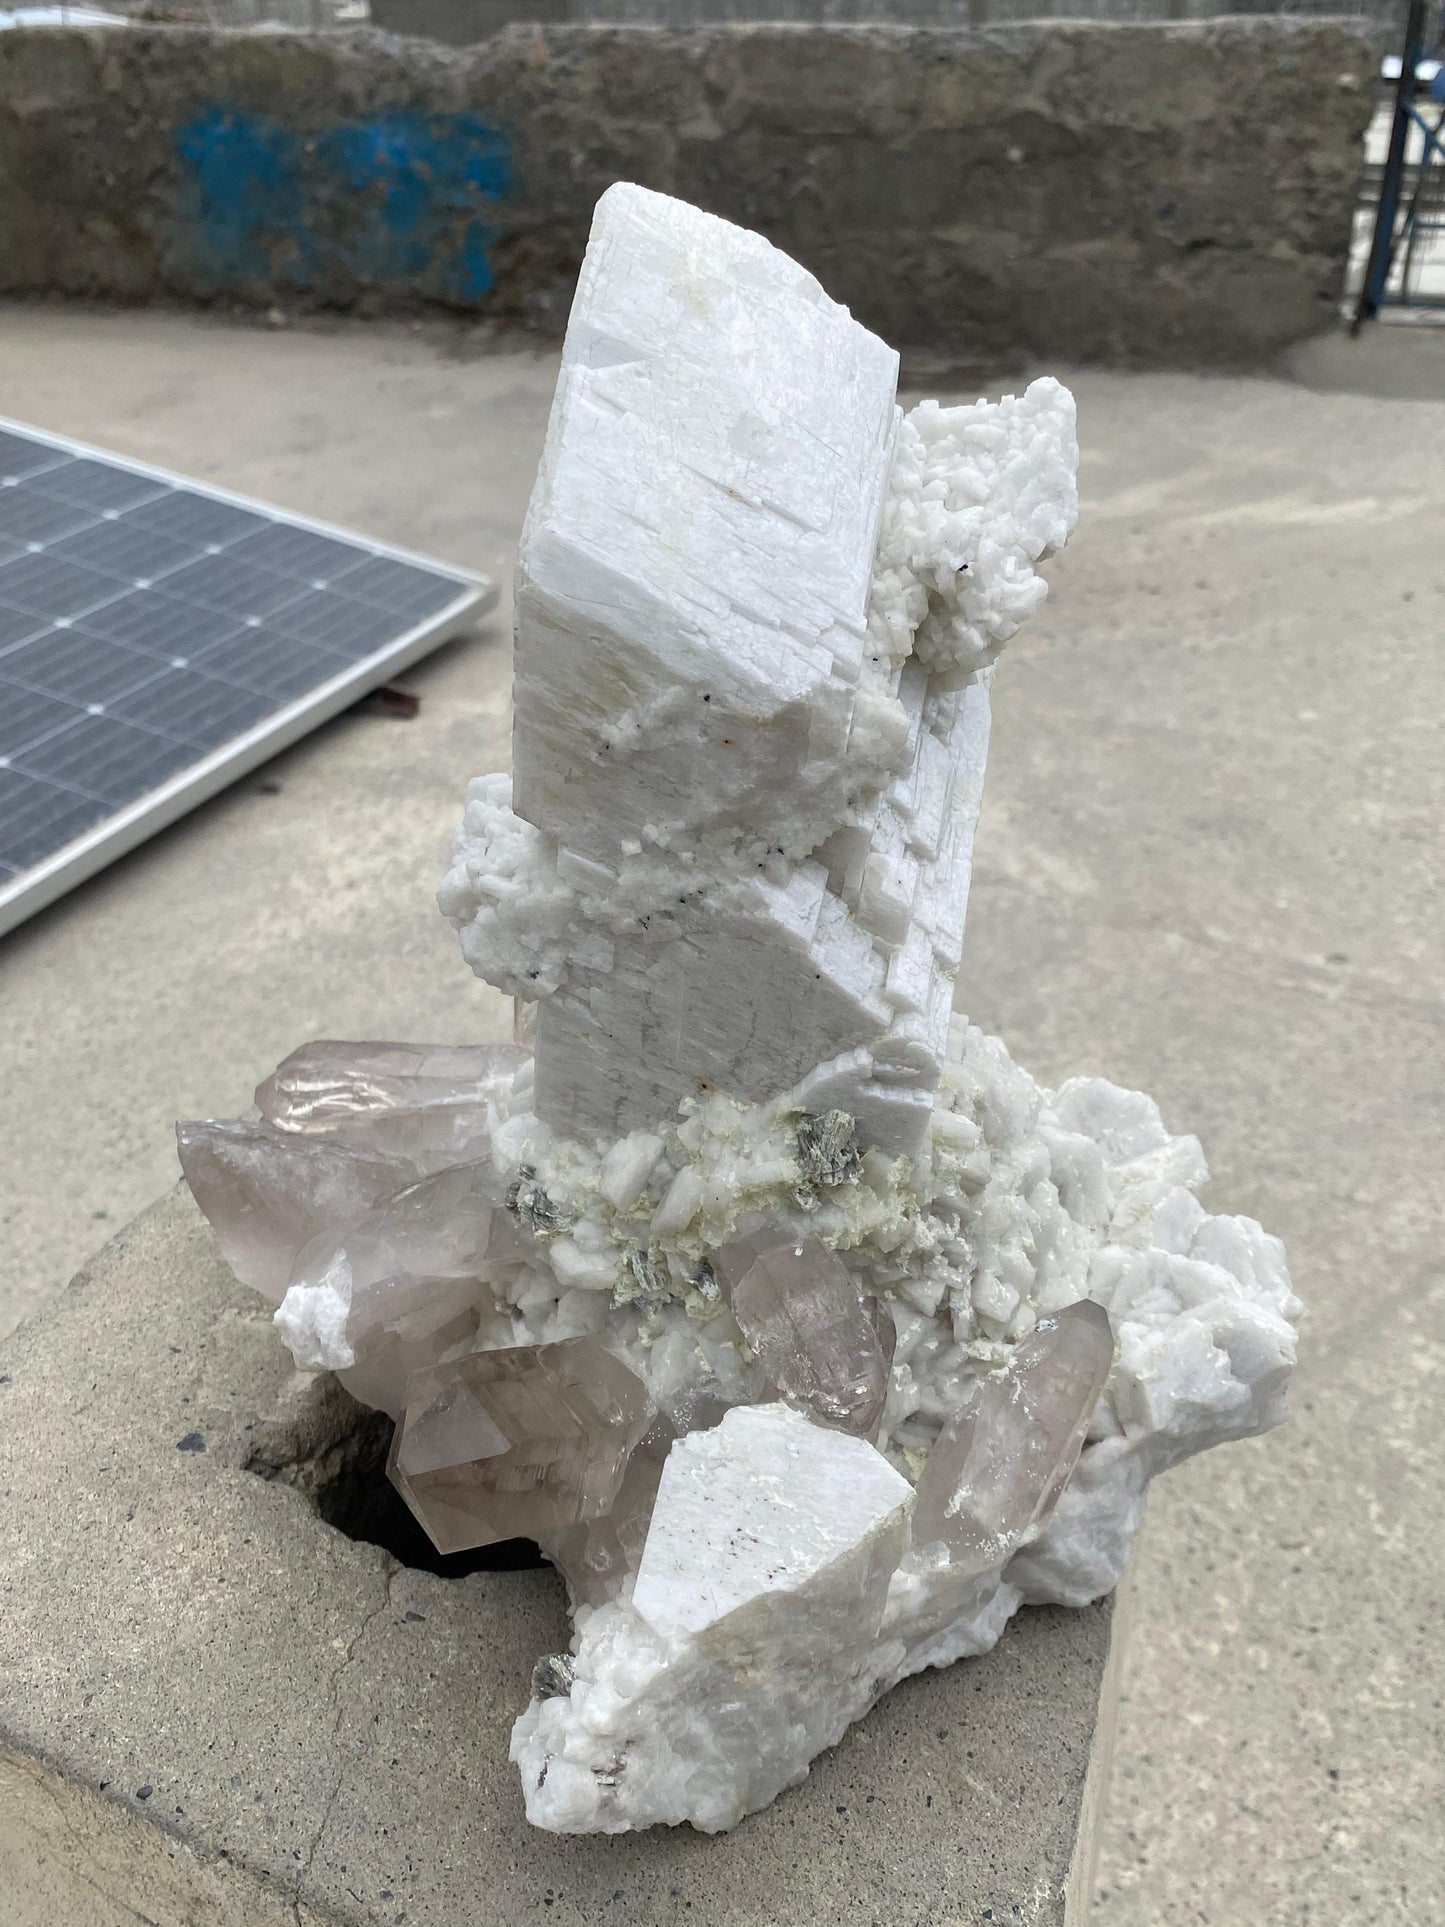 Microcline Feldspar Crystal with Smoky Quartz Cluster and Albite